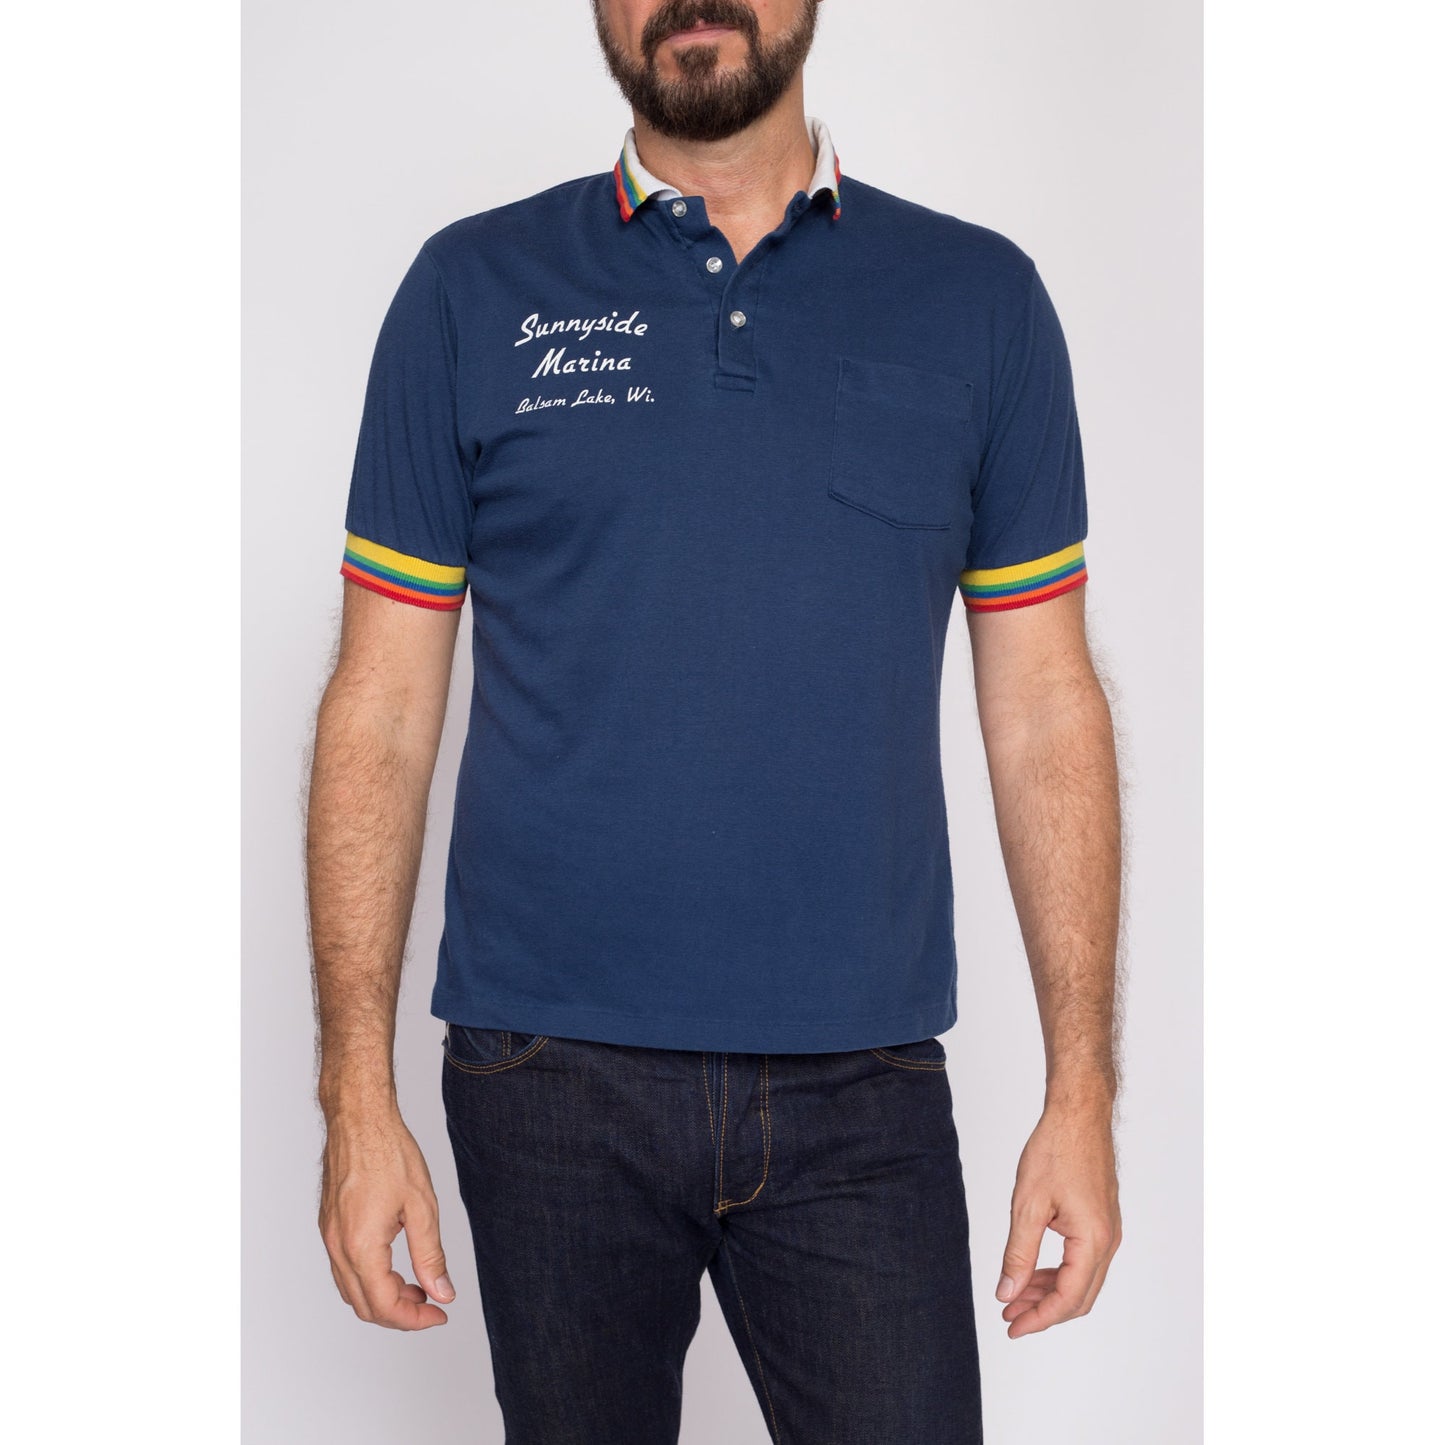 M| 80s Rainbow Striped Polo Shirt - Men's Medium | Vintage Balsam Lake Staff Uniform Short Sleeve Collared Shirt